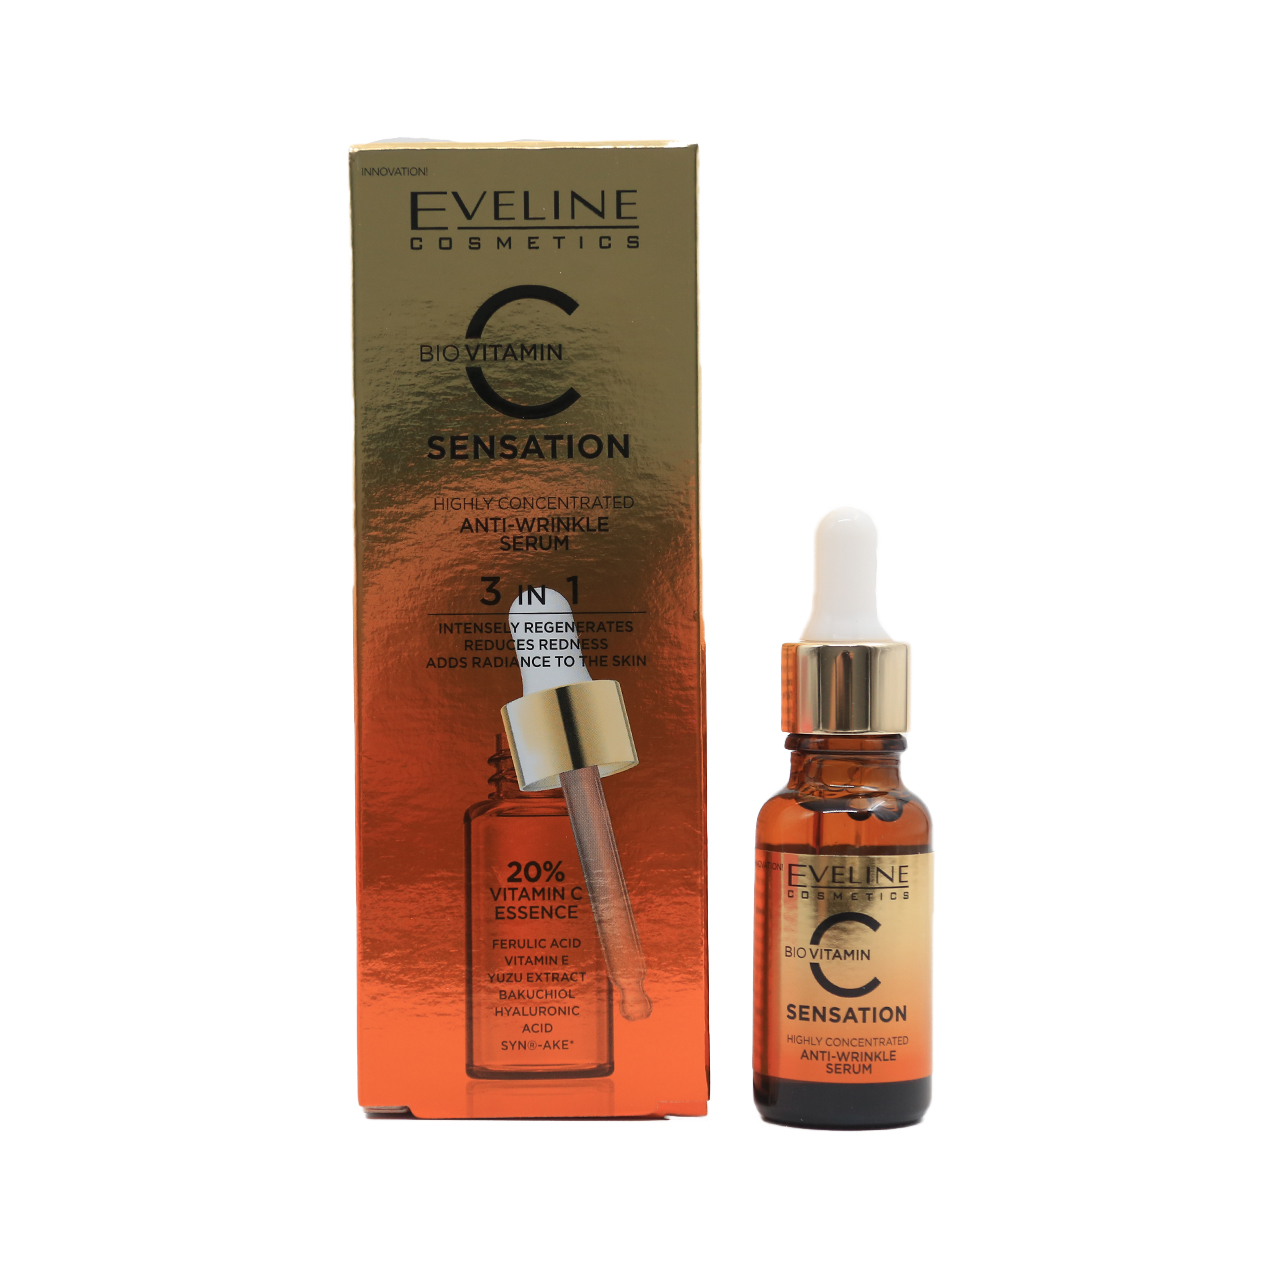 157-5903416026044-Eveline Cosmetics Bio Vitamin C Sensation 3 in 1 Anti-Wrinkle Serum 18ml